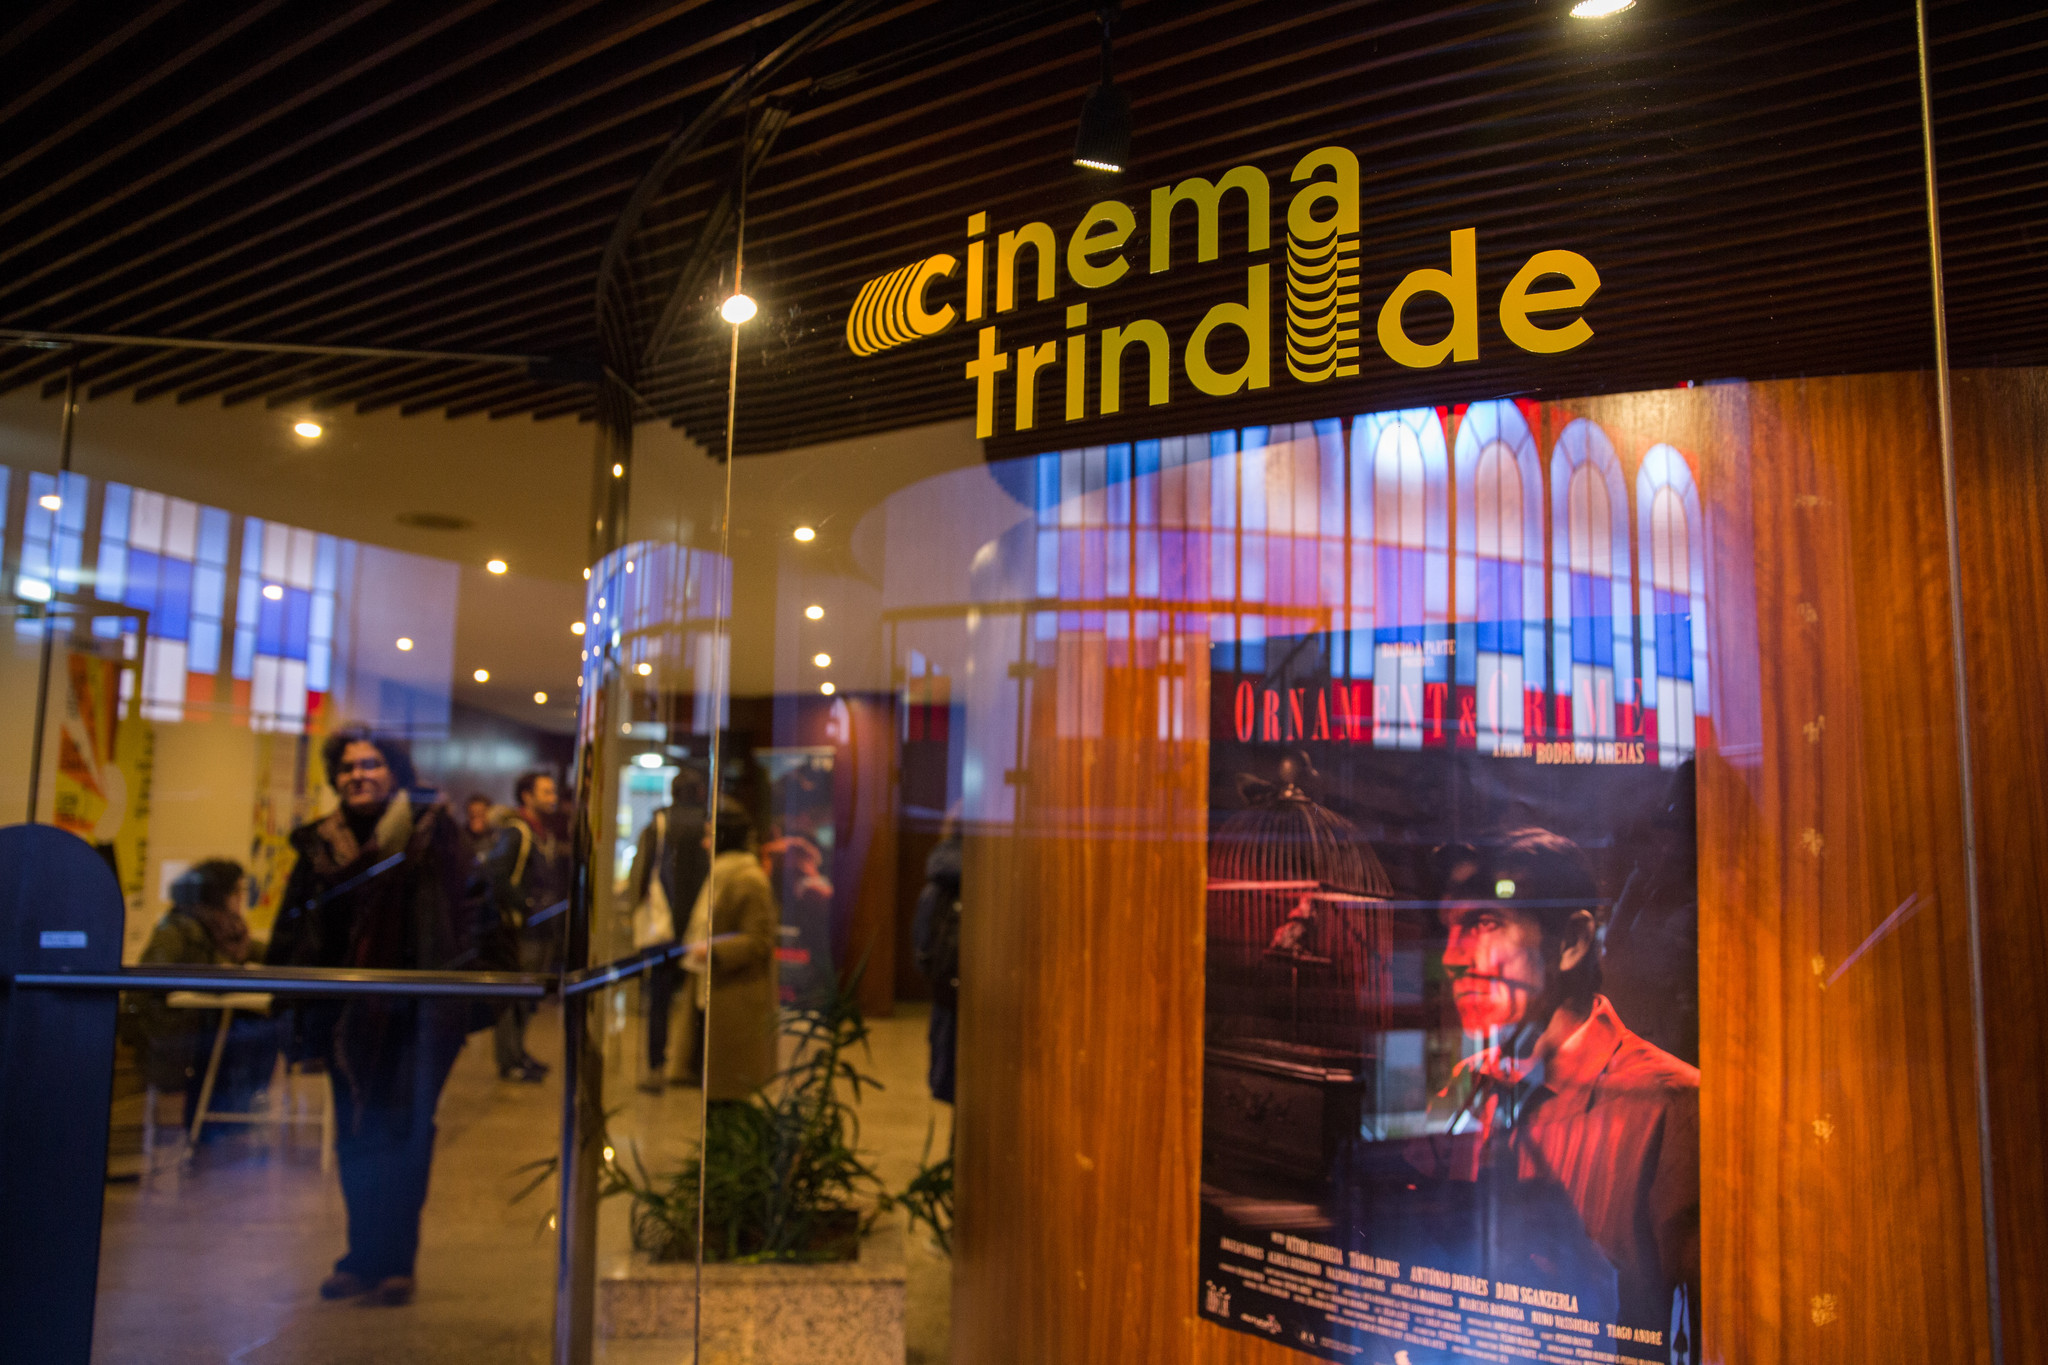 lm-cinema trindade 09-02-17-5-1.jpg